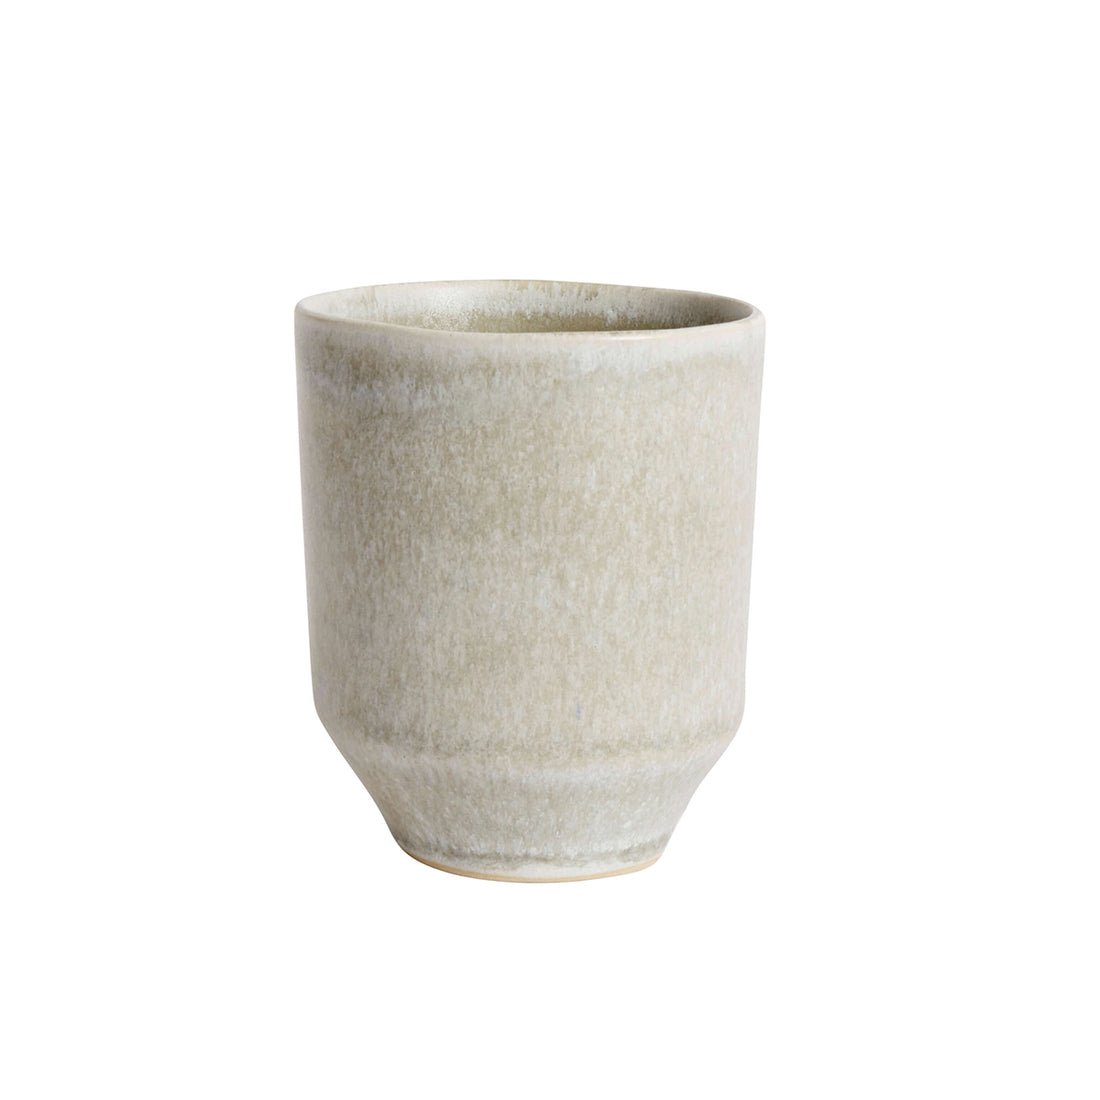 Muubs Kop Ceto - Soft grey: 55754 - Keramik - H: 8,5 Ø: 7,5 cm - DesignGaragen.dk.